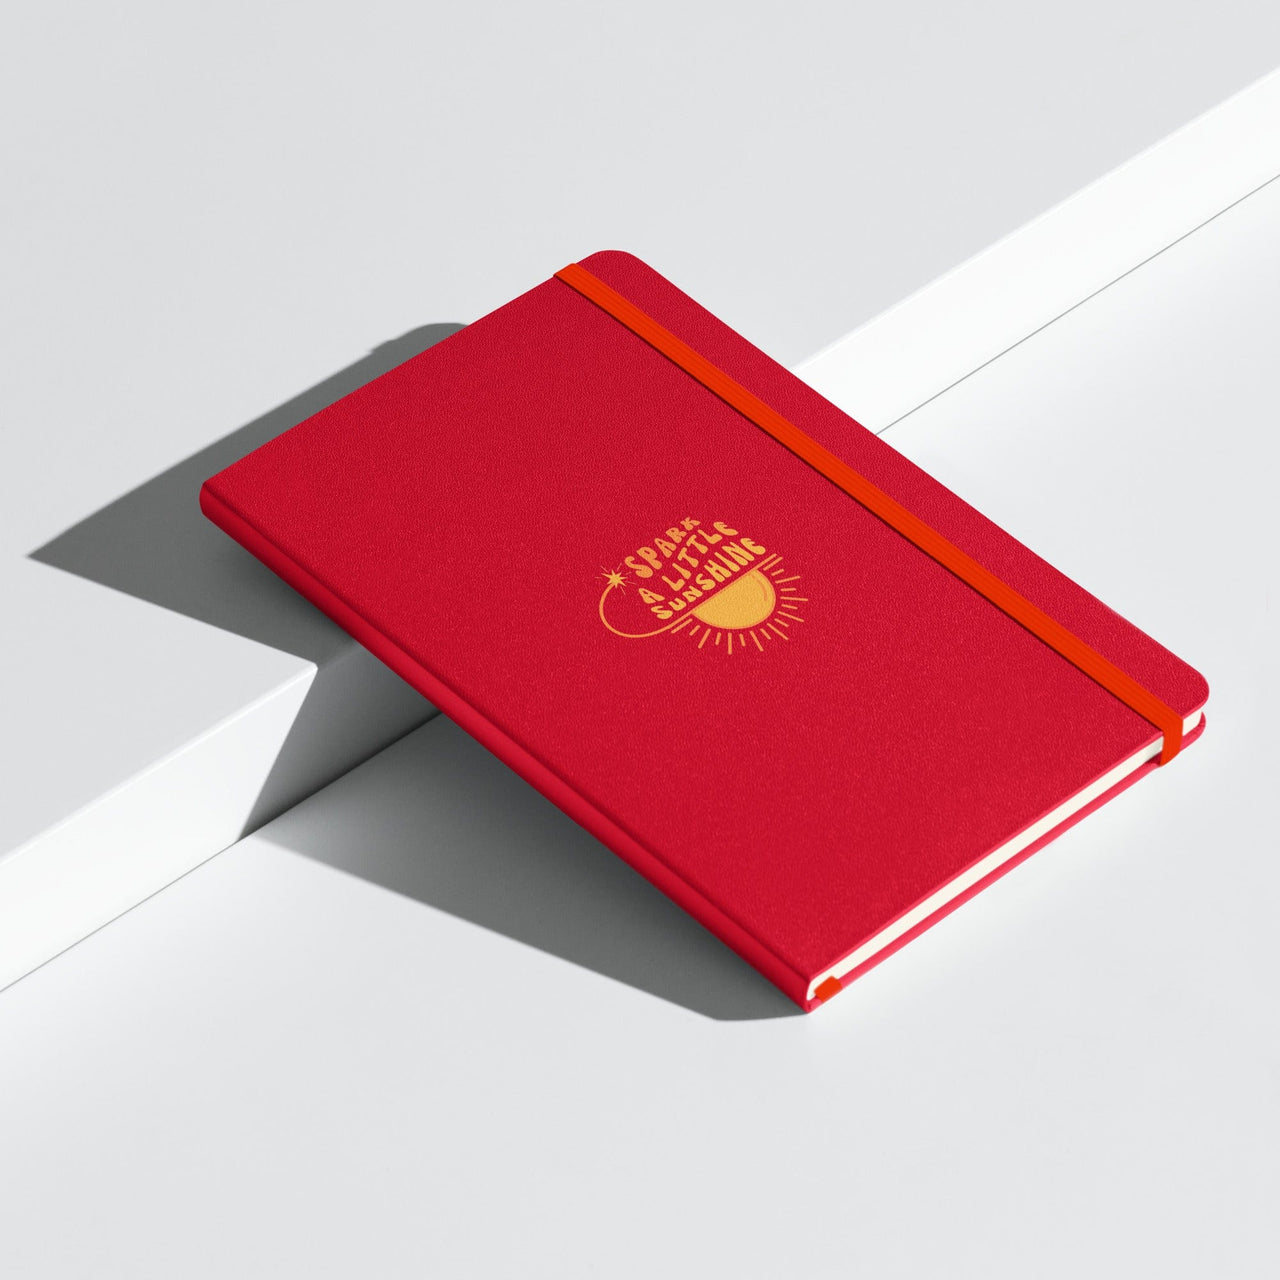  Spark A Little Sunshine Hardcover Bound Notebook - Red